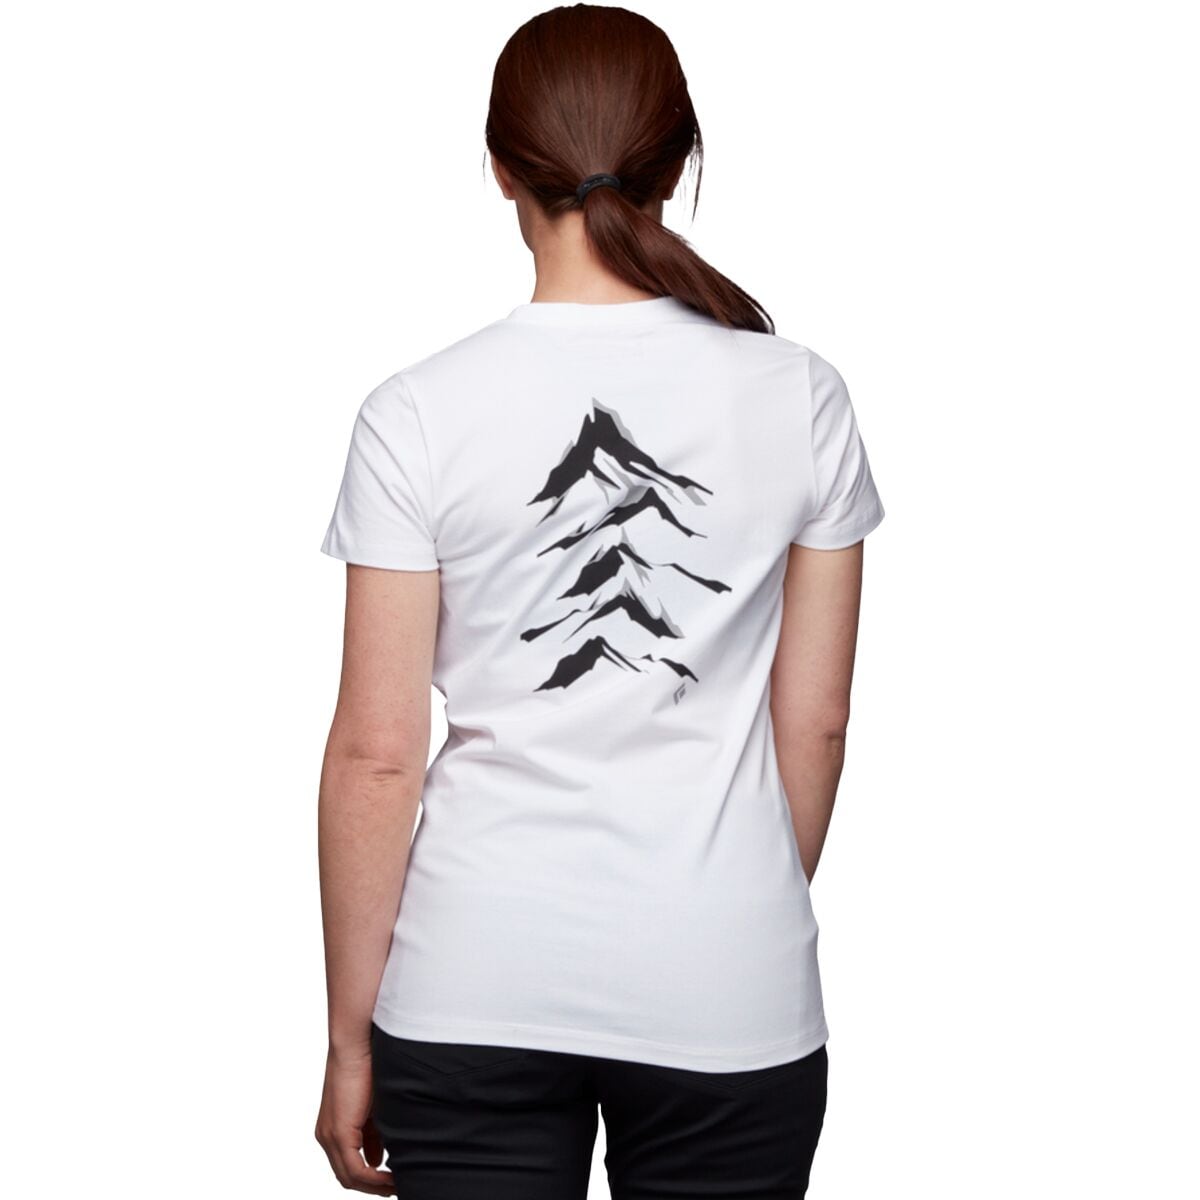 Black Diamond Peaks Short-Sleeve T-Shirt - Women's